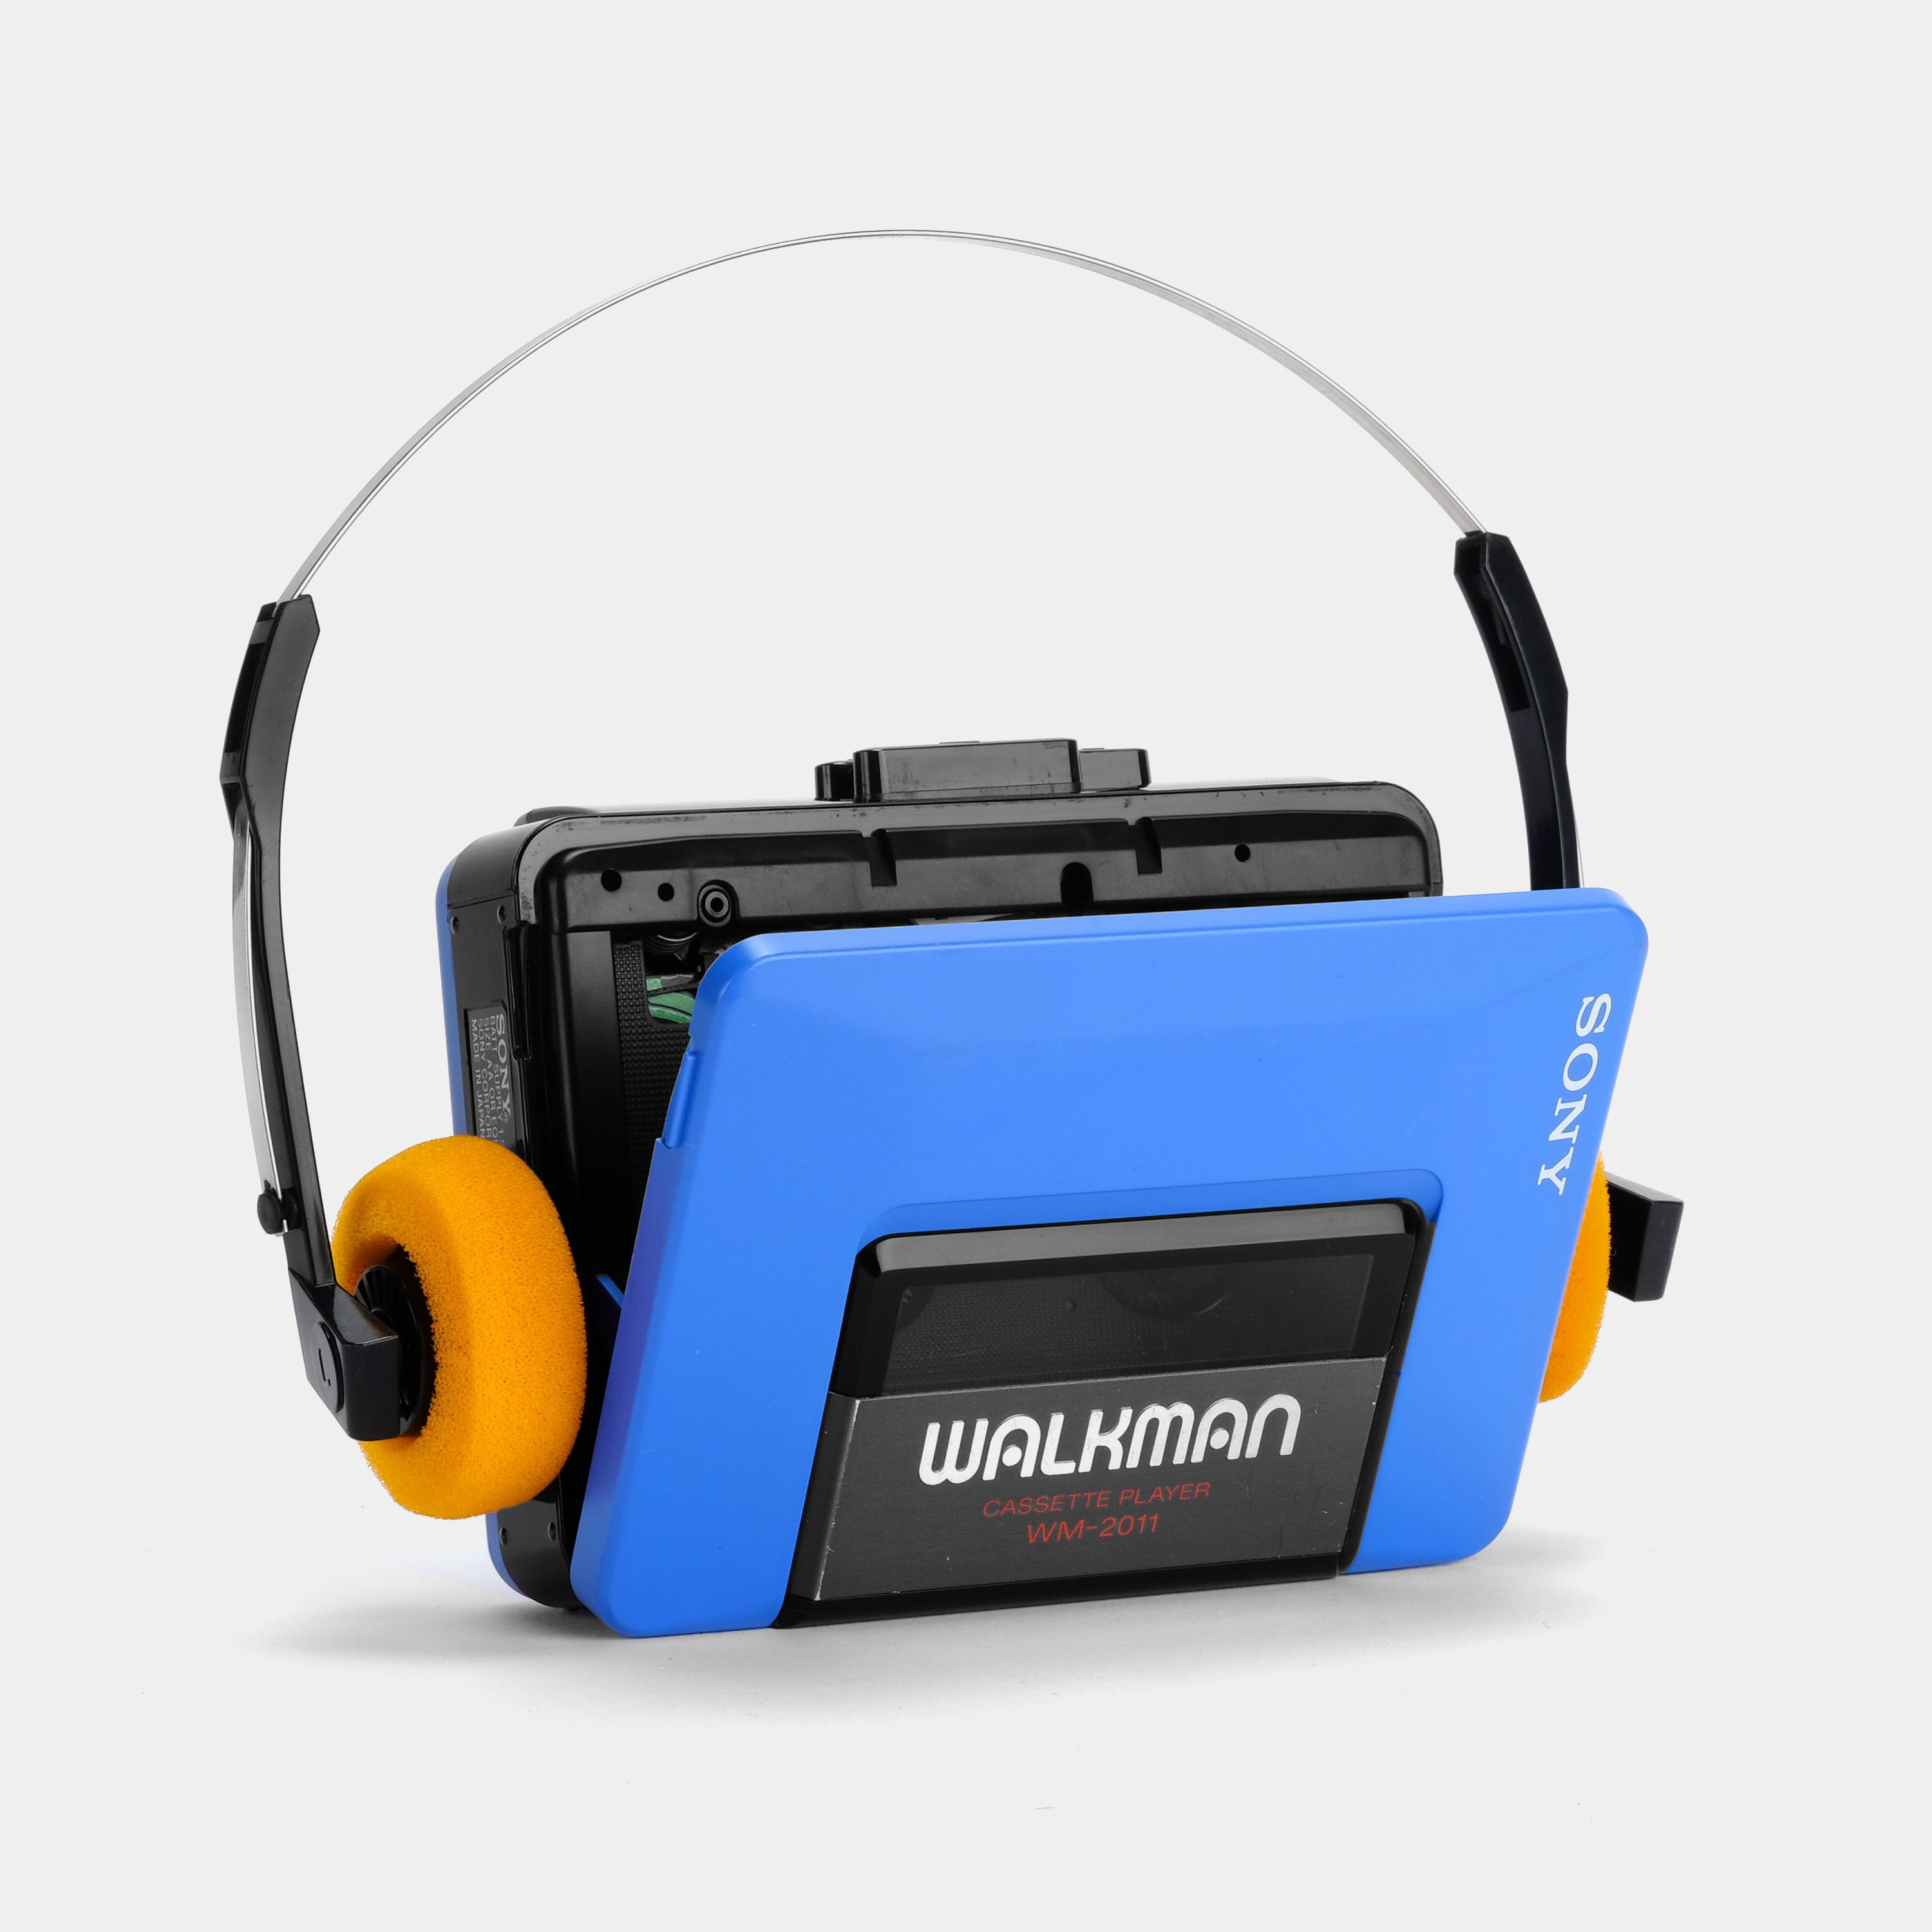 Sony Walkman WM-2011 Blue Portable Cassette Player